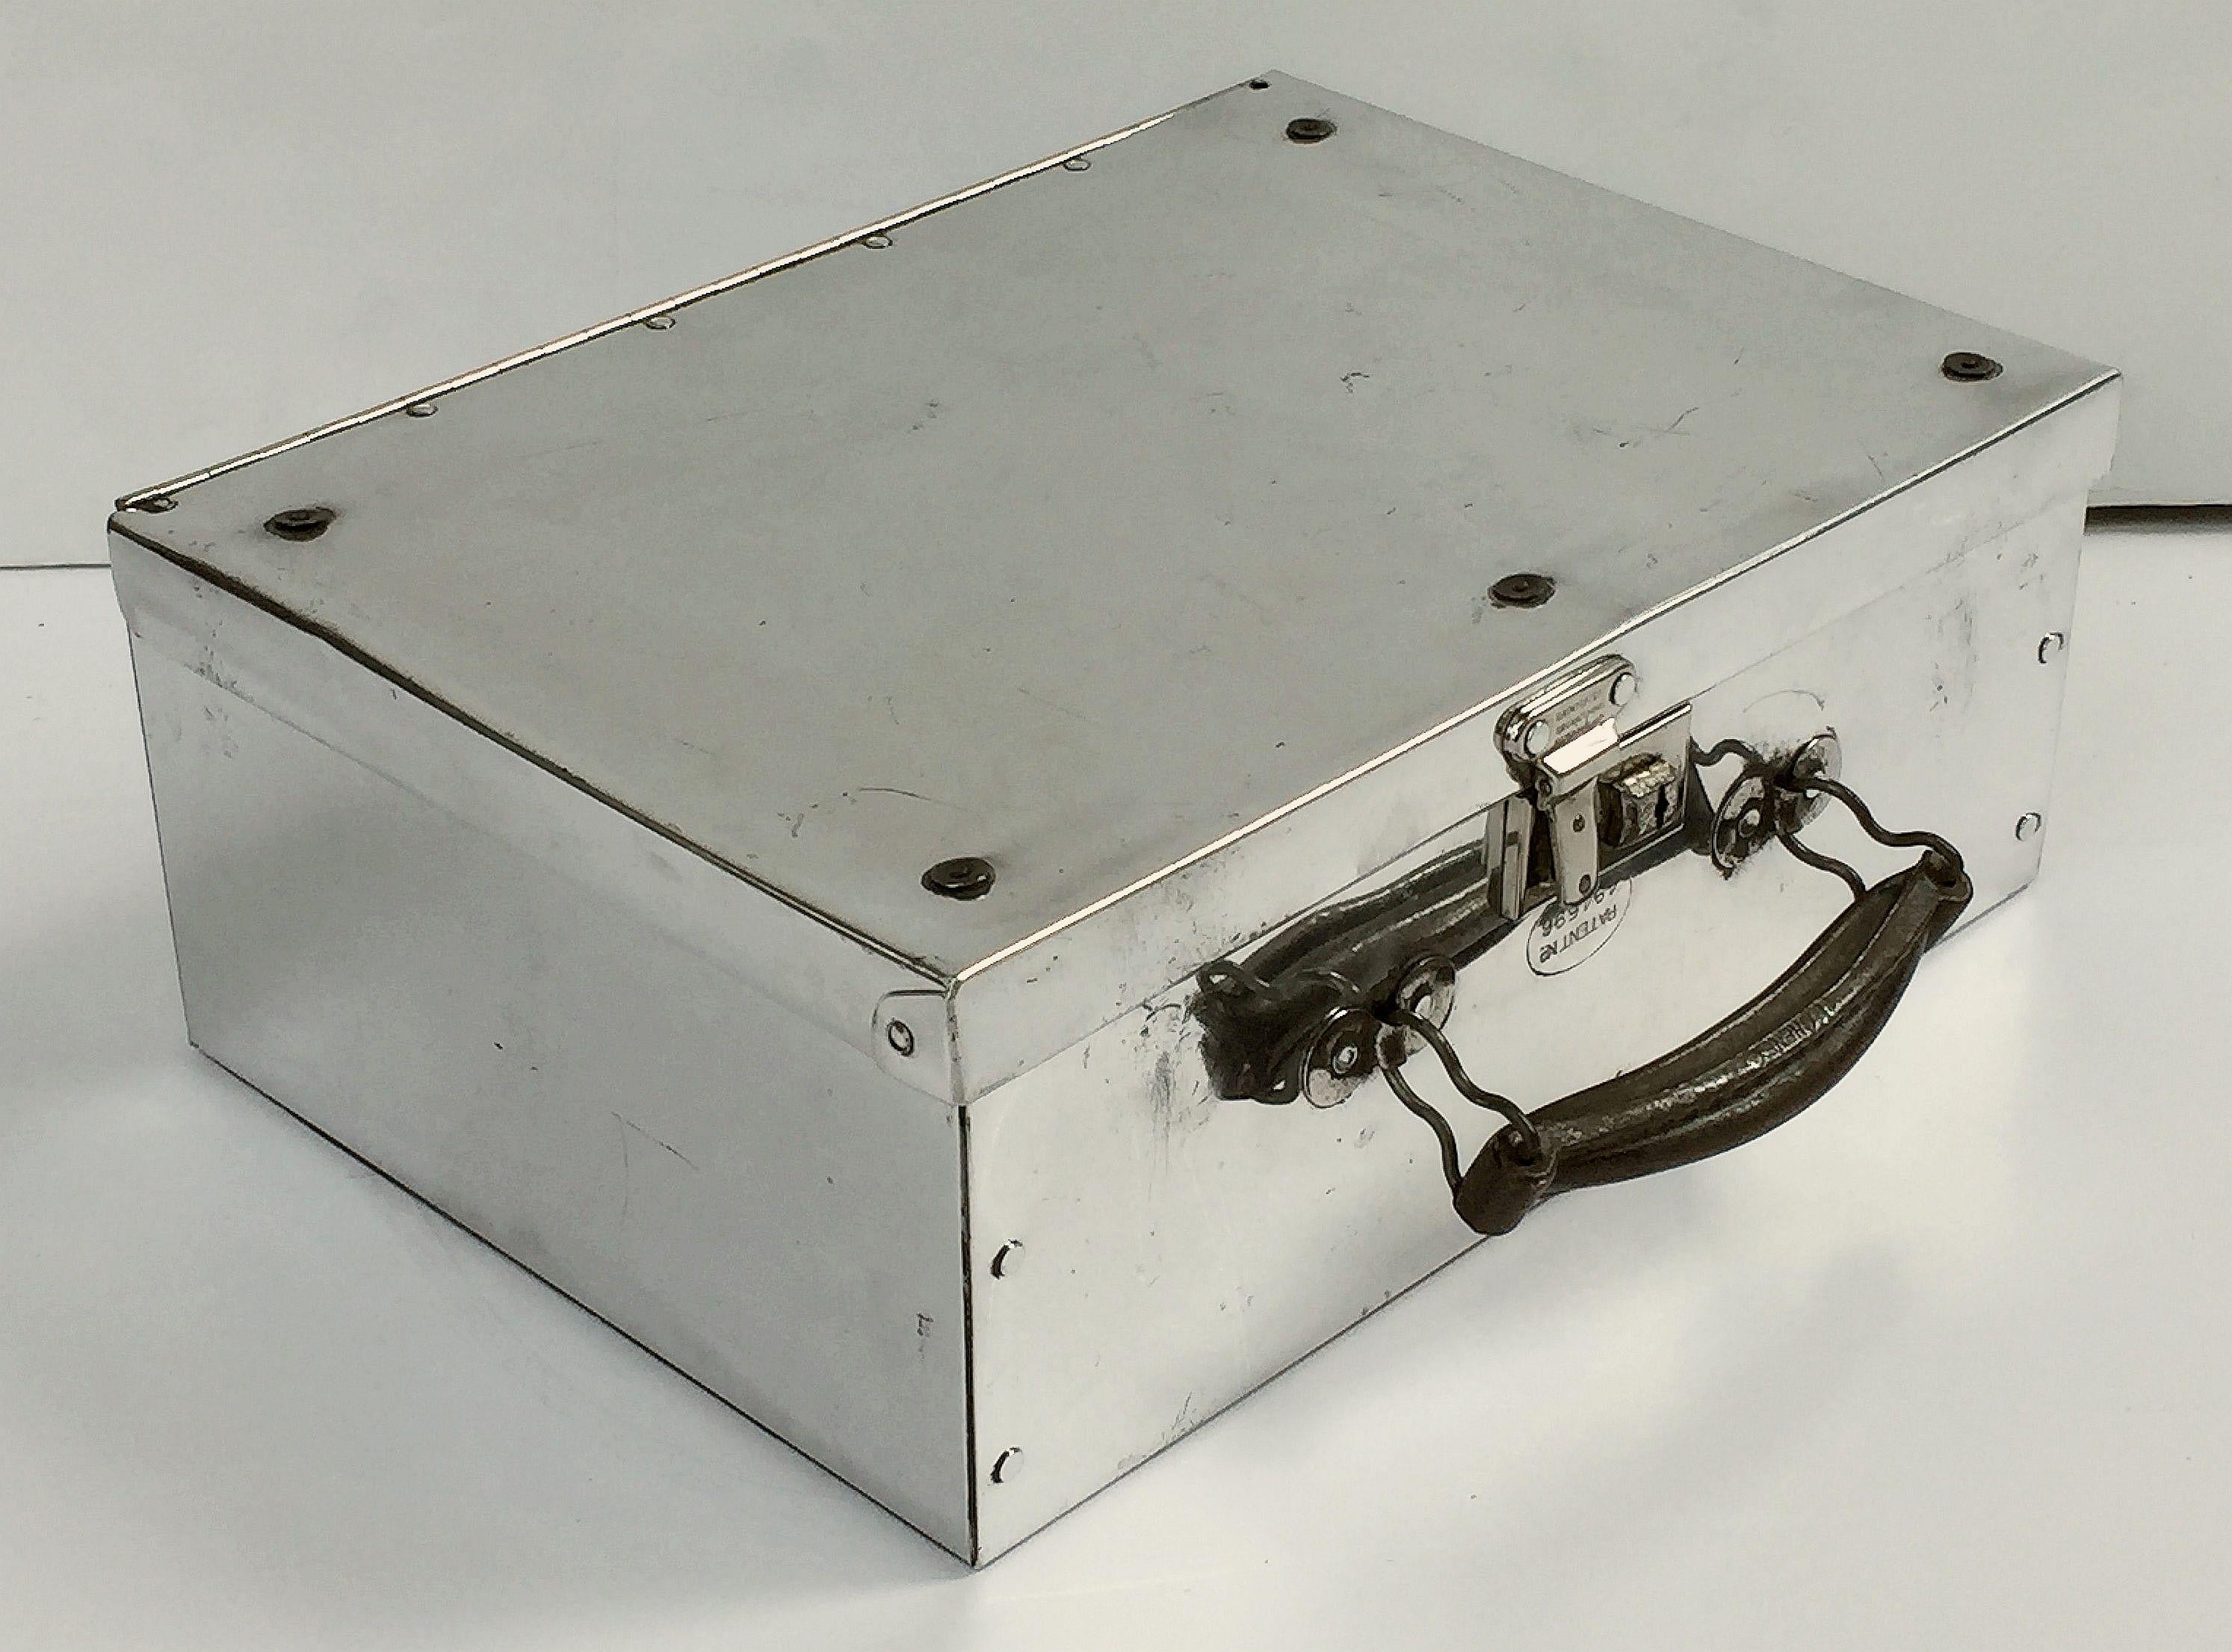 A fine English rectangular luggage case or traveler's suitcase of aluminum with original hardware and handle.

